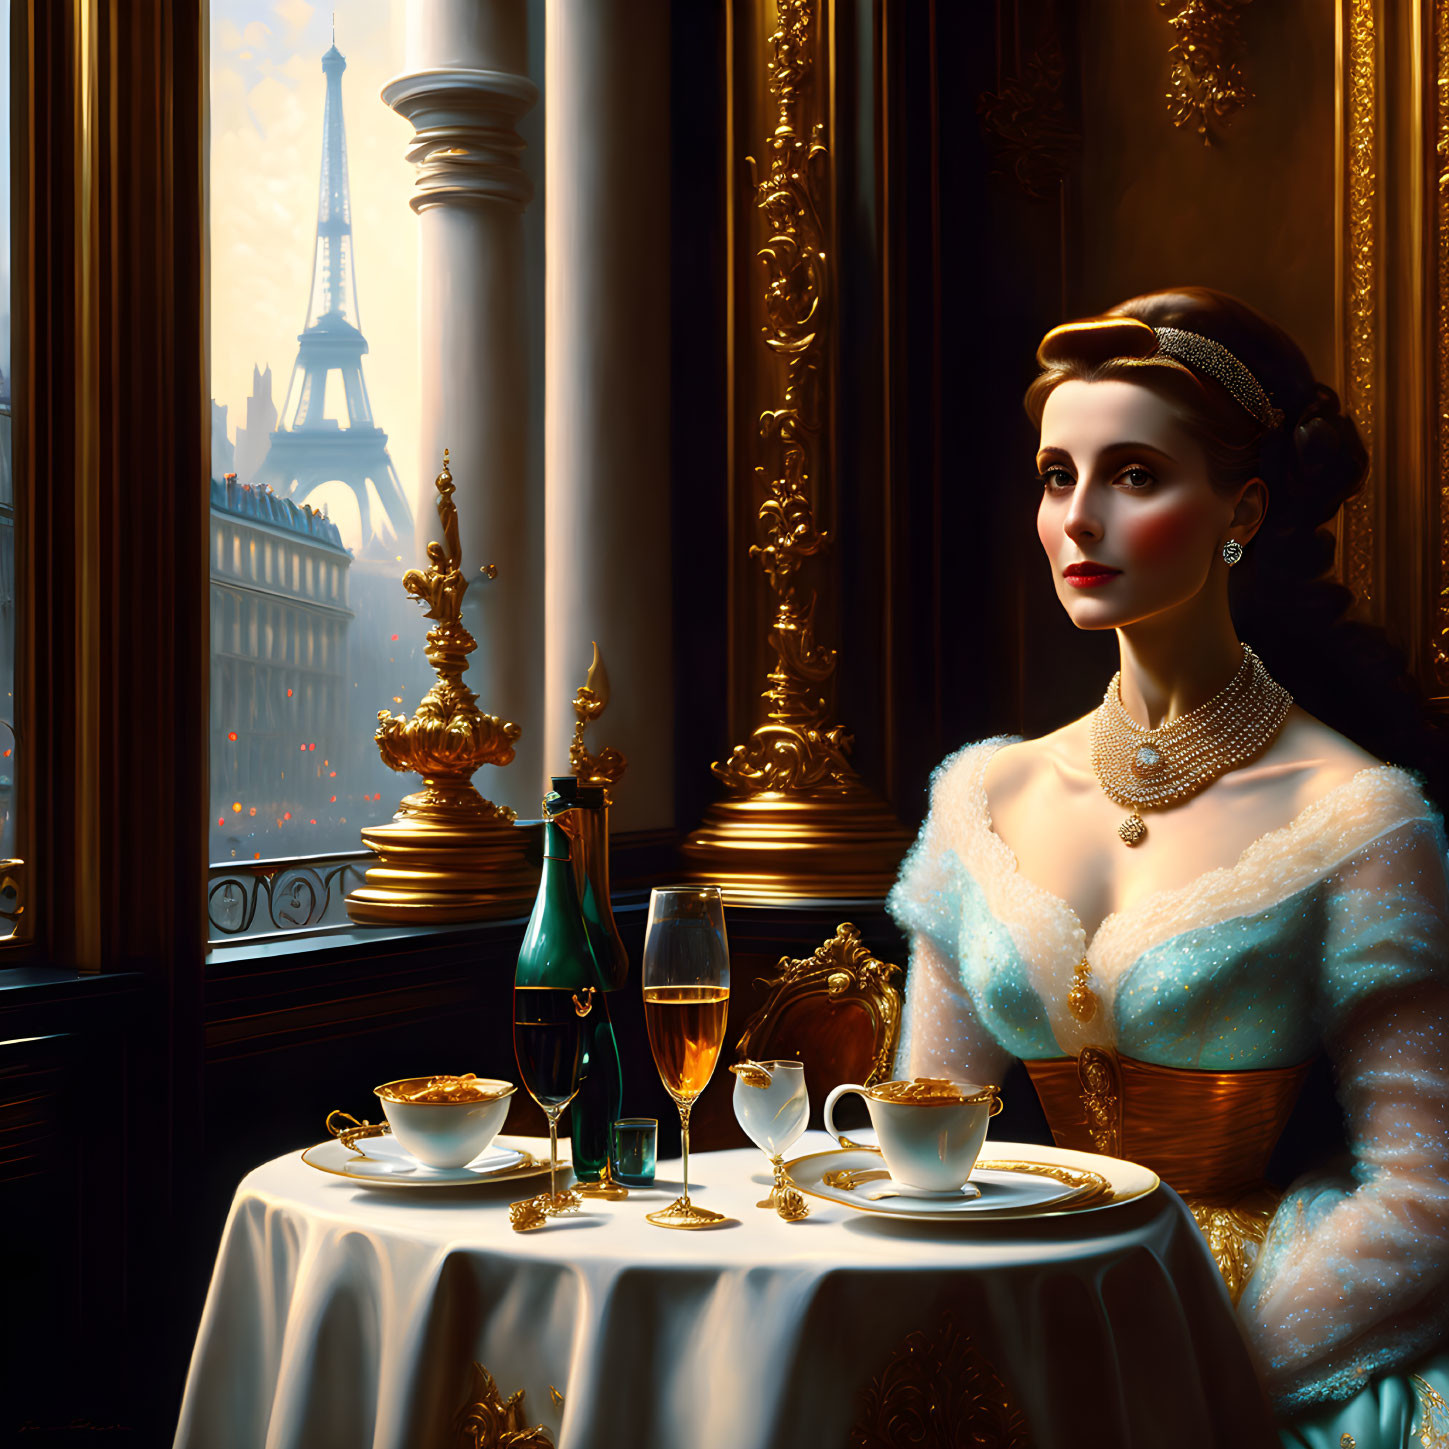 Breakfast at Tiffany's by Albert Edelfelt 